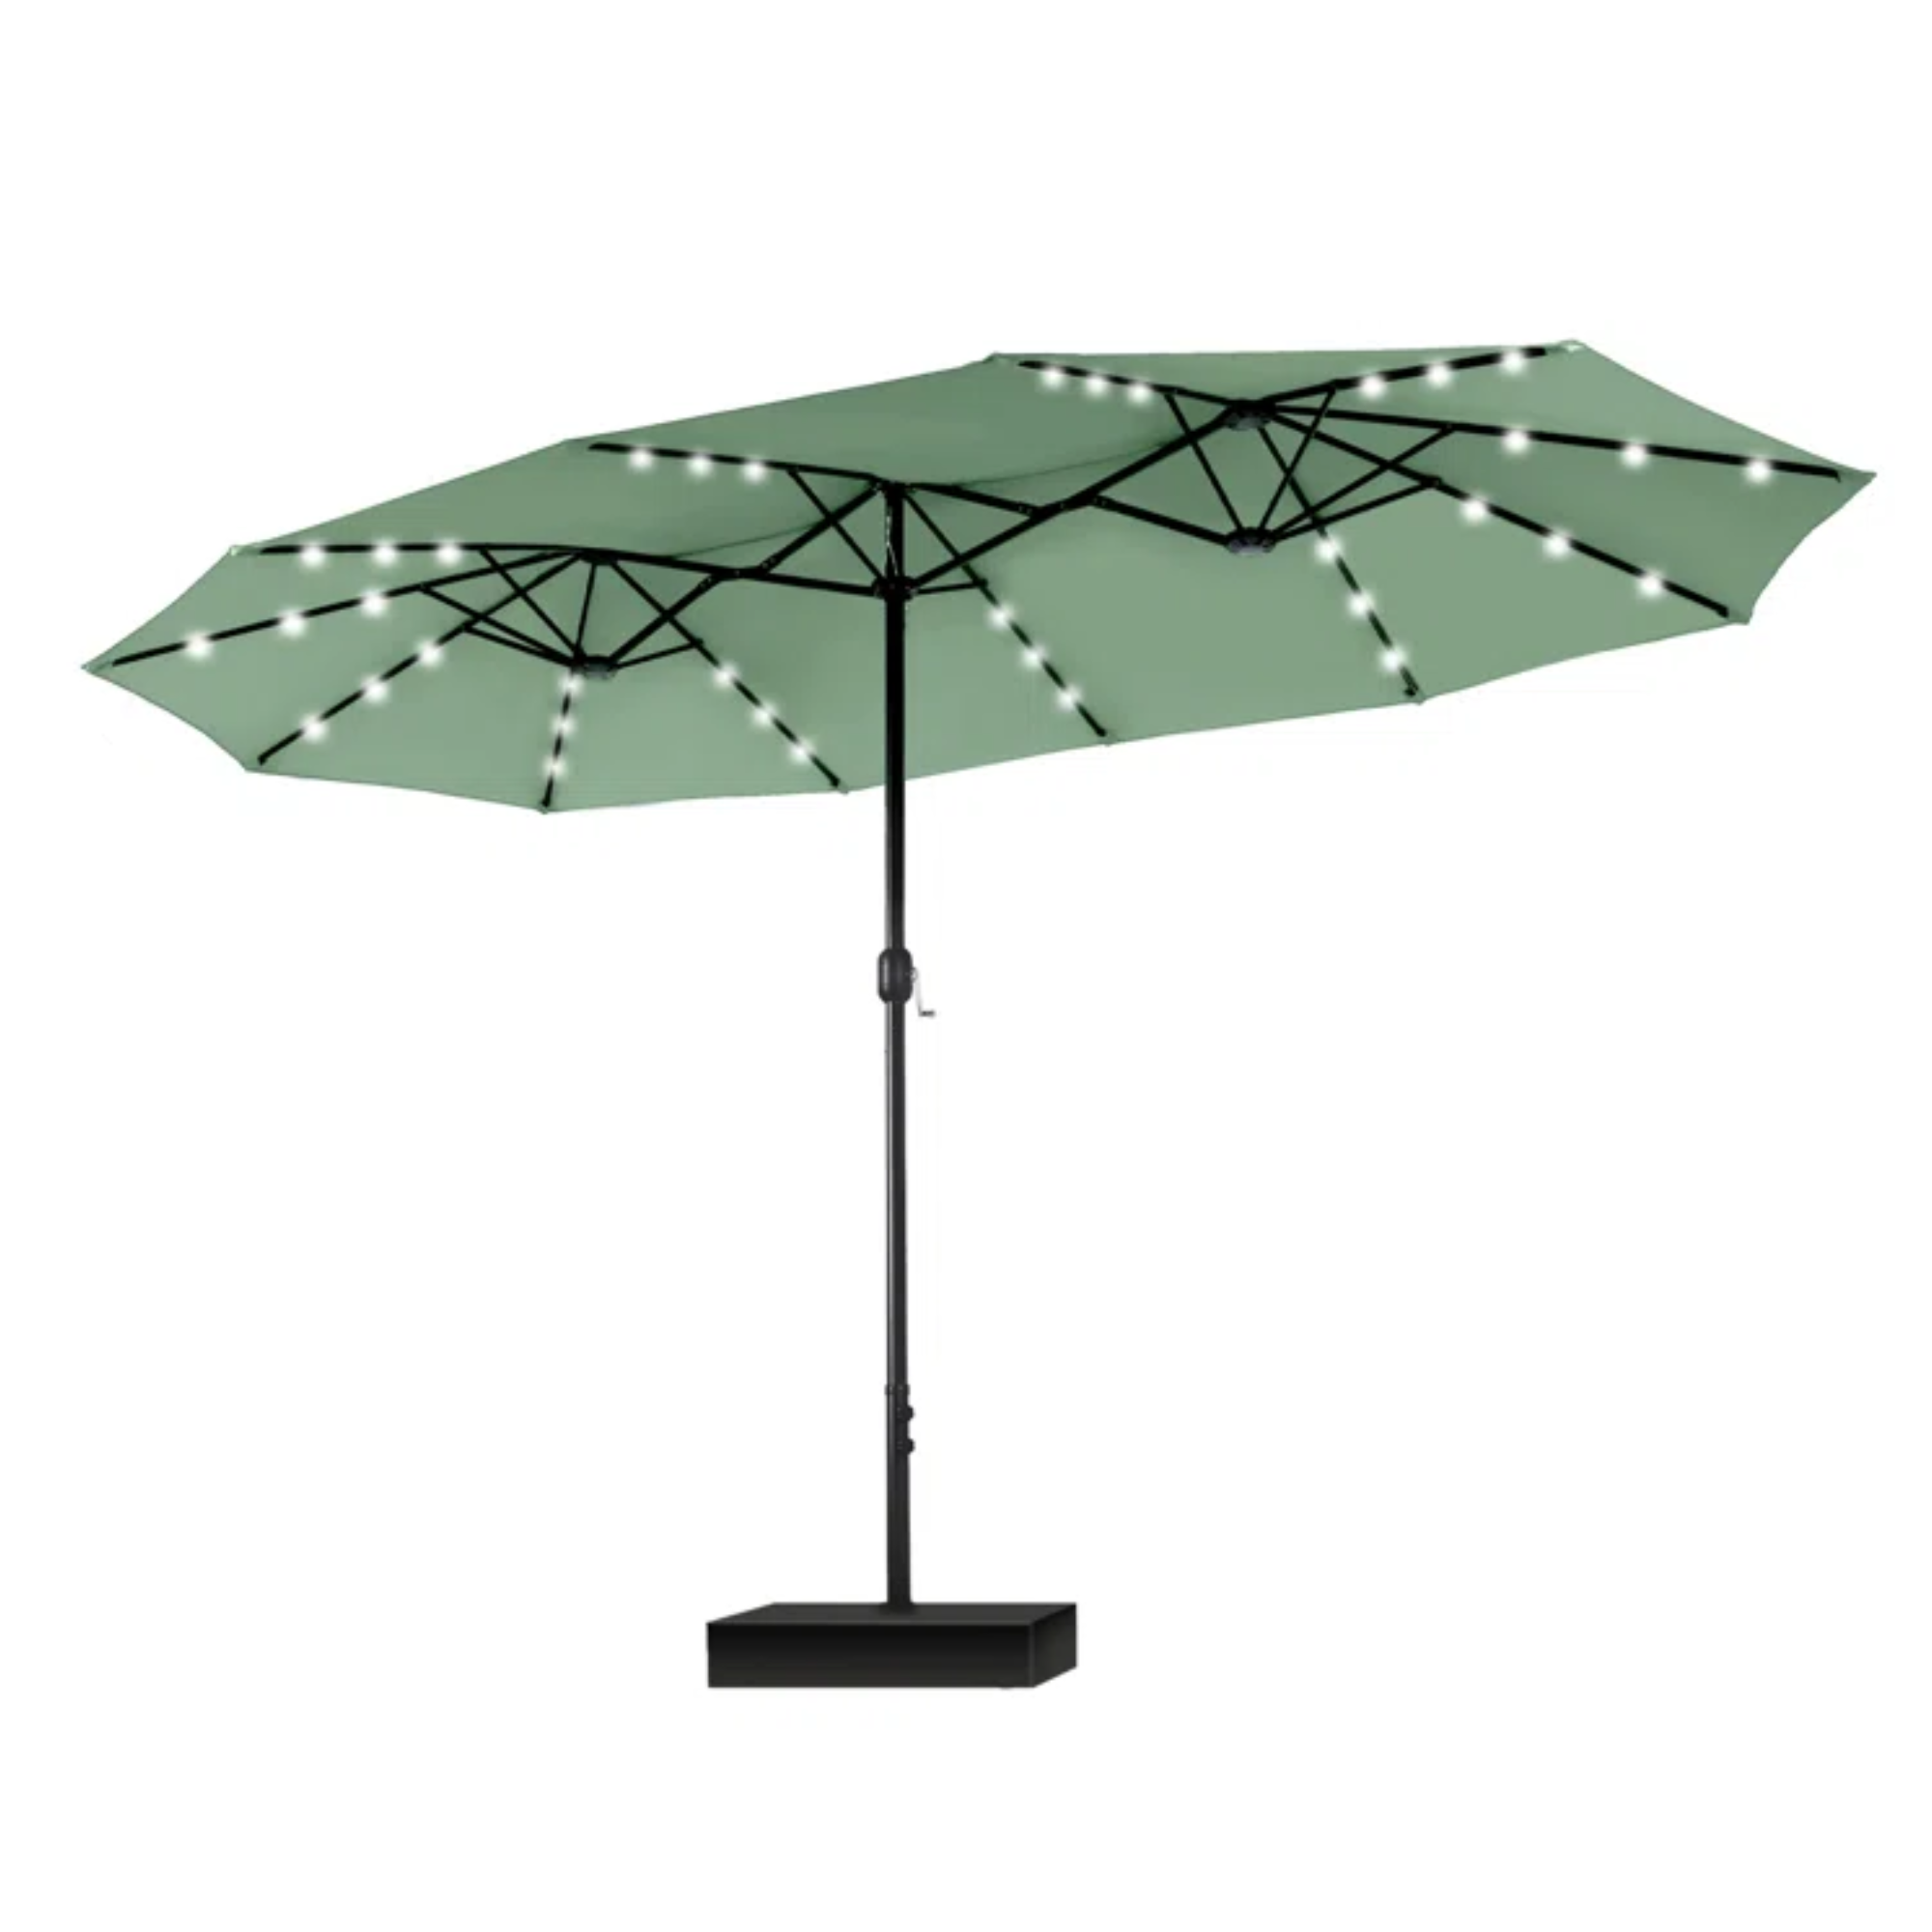 A green patio umbrella with lights